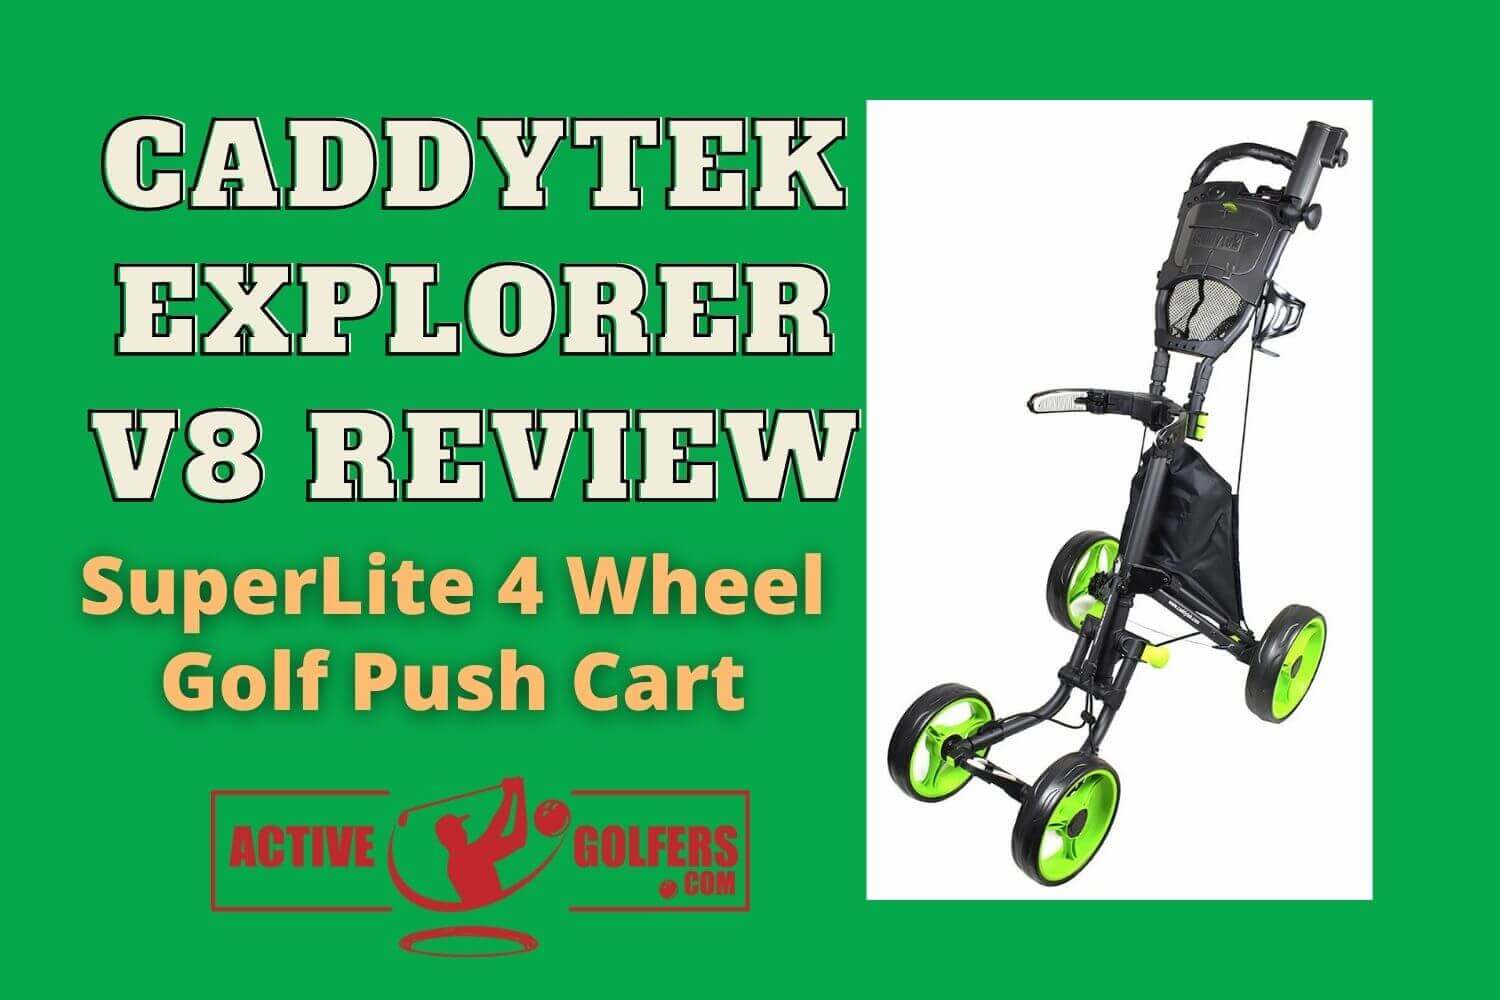 CaddyTek Explorer V8 Review